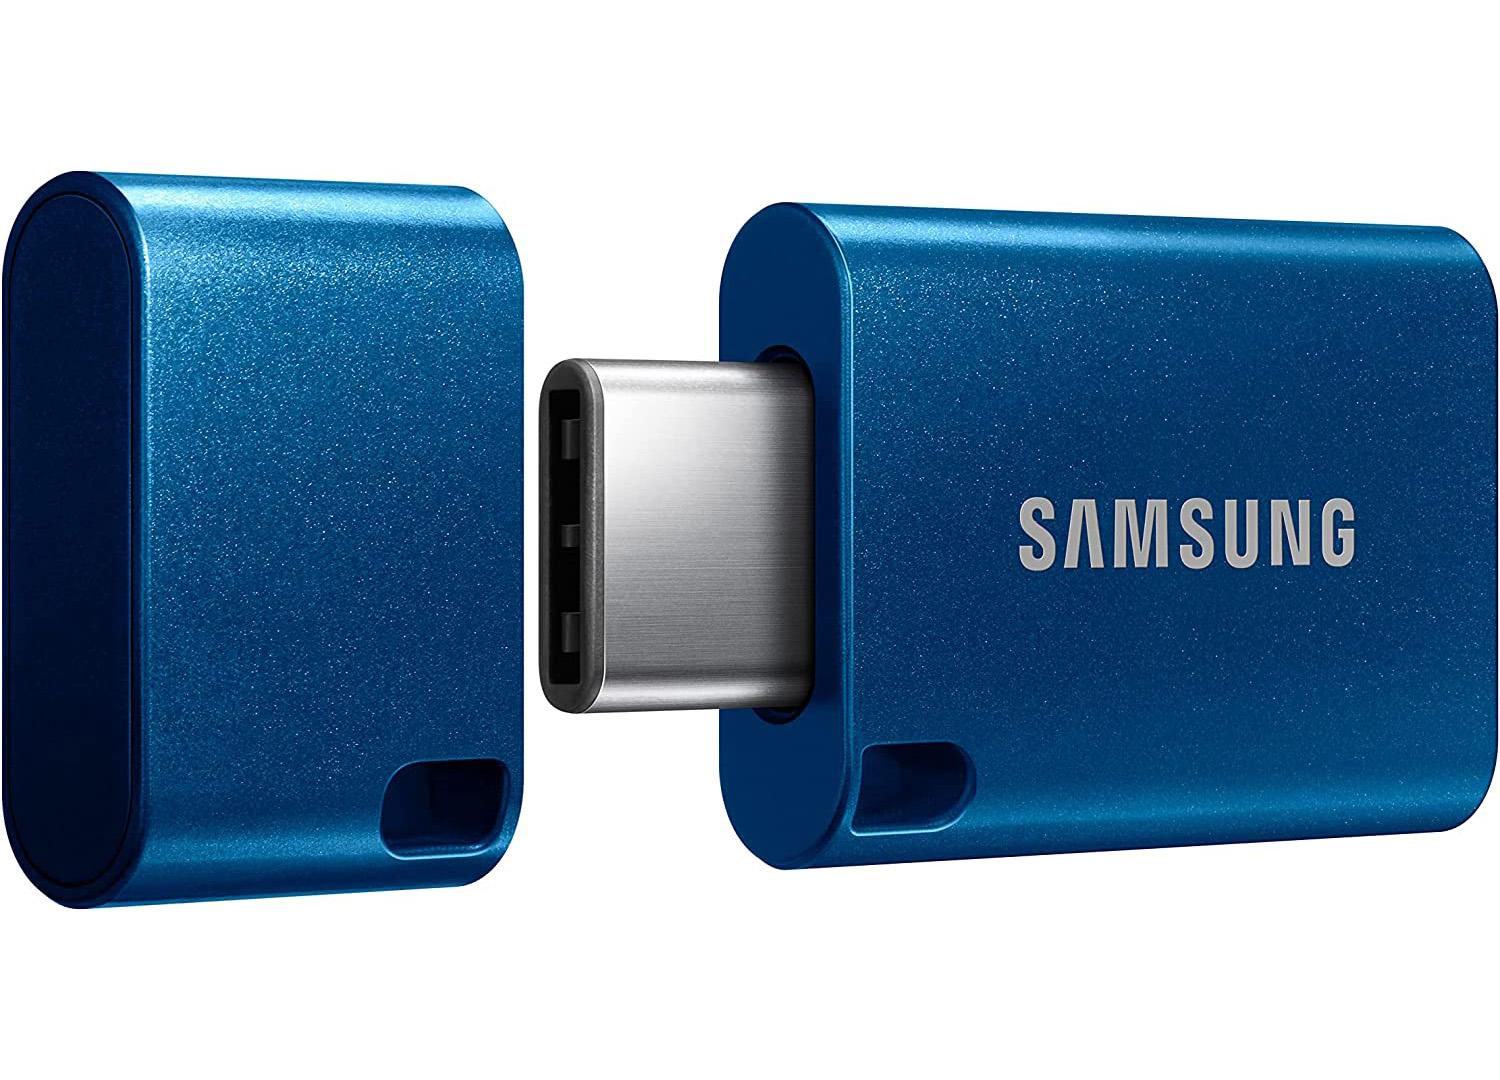 128GB Samsung Type-C USB 3.0 Flash Drive for $16.99